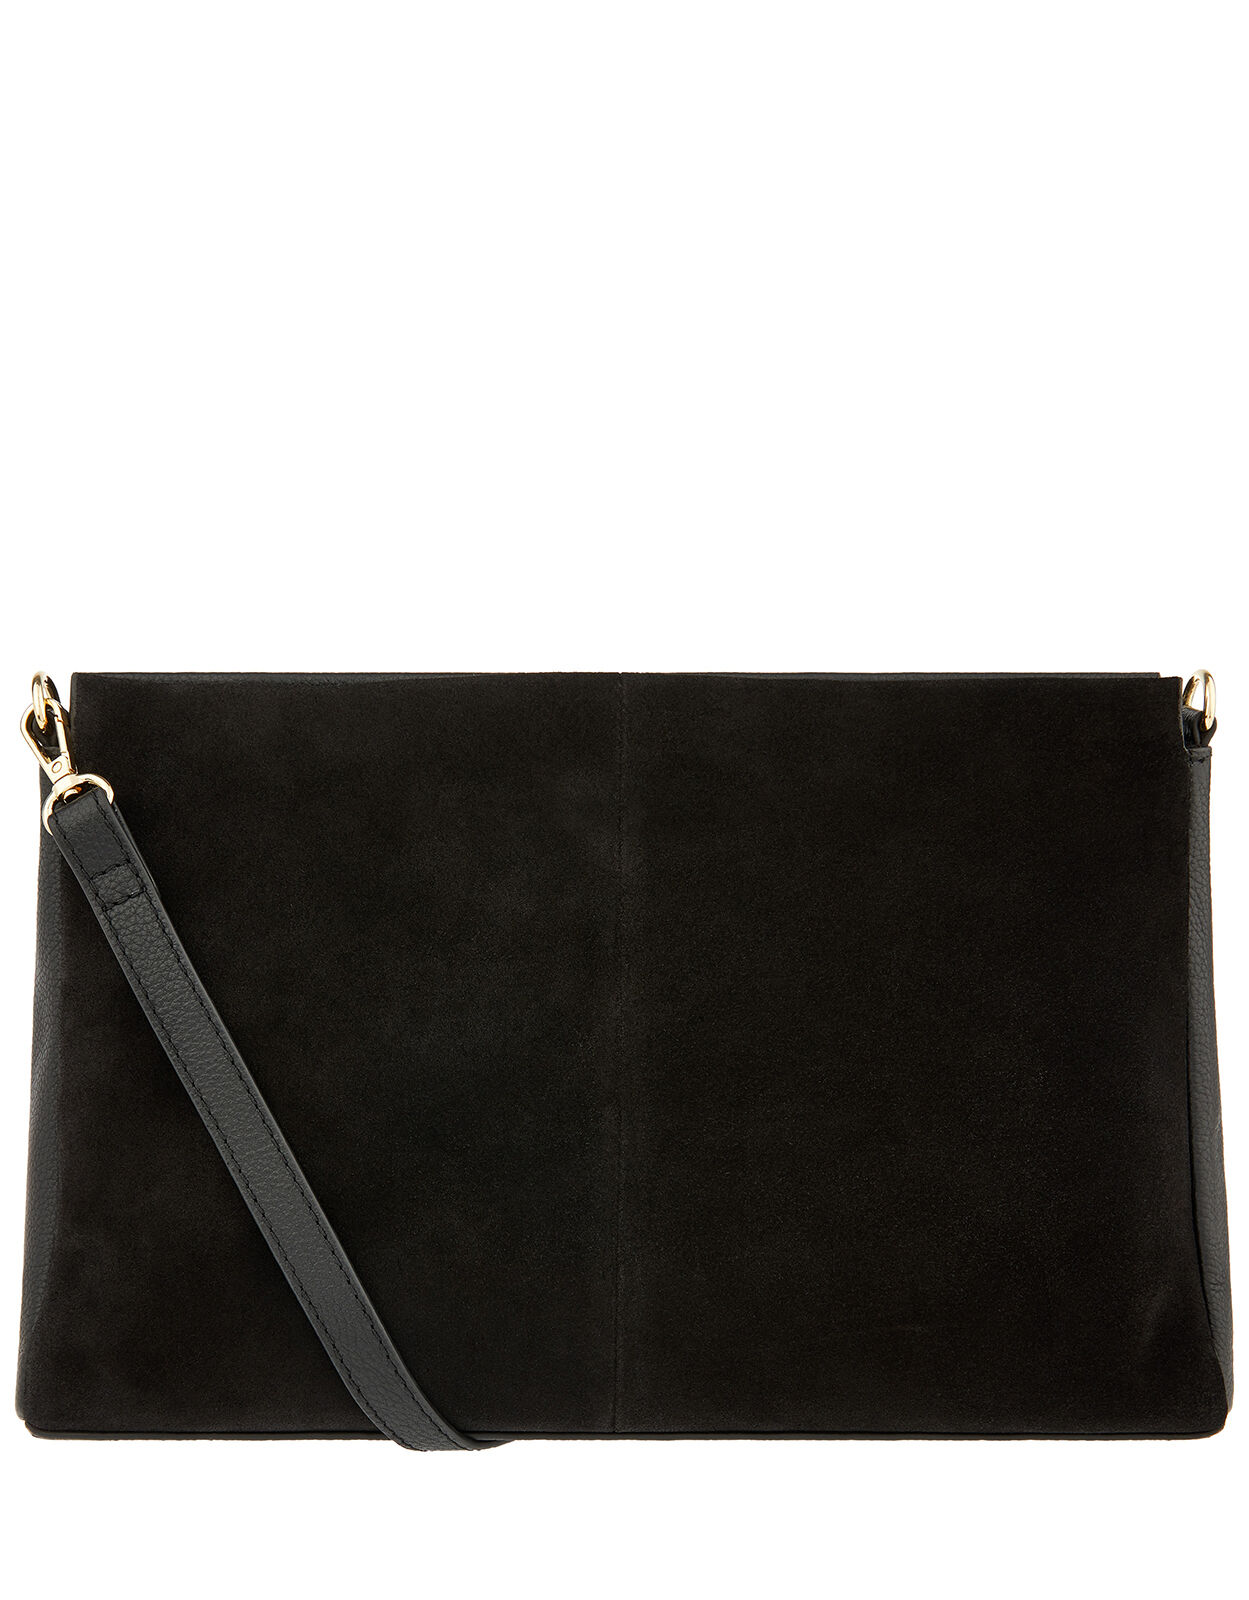 Black Suede Clutch Bags & Handbags for Women for sale | eBay